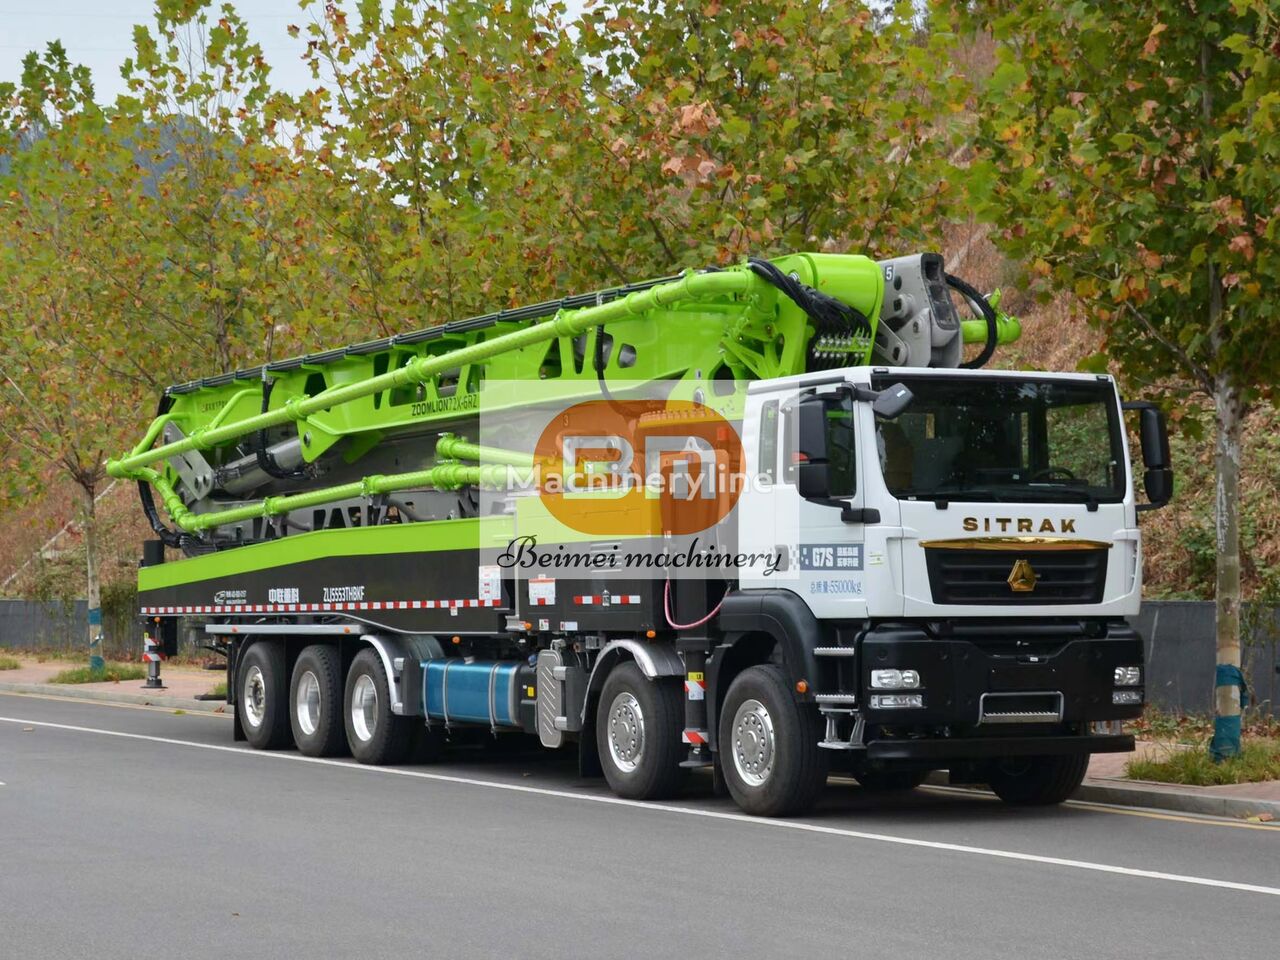 nowa pompa do betonu Zoomlion Zoomlion brand new 70m pump truck  na podwoziu Sitrak  Sitrak